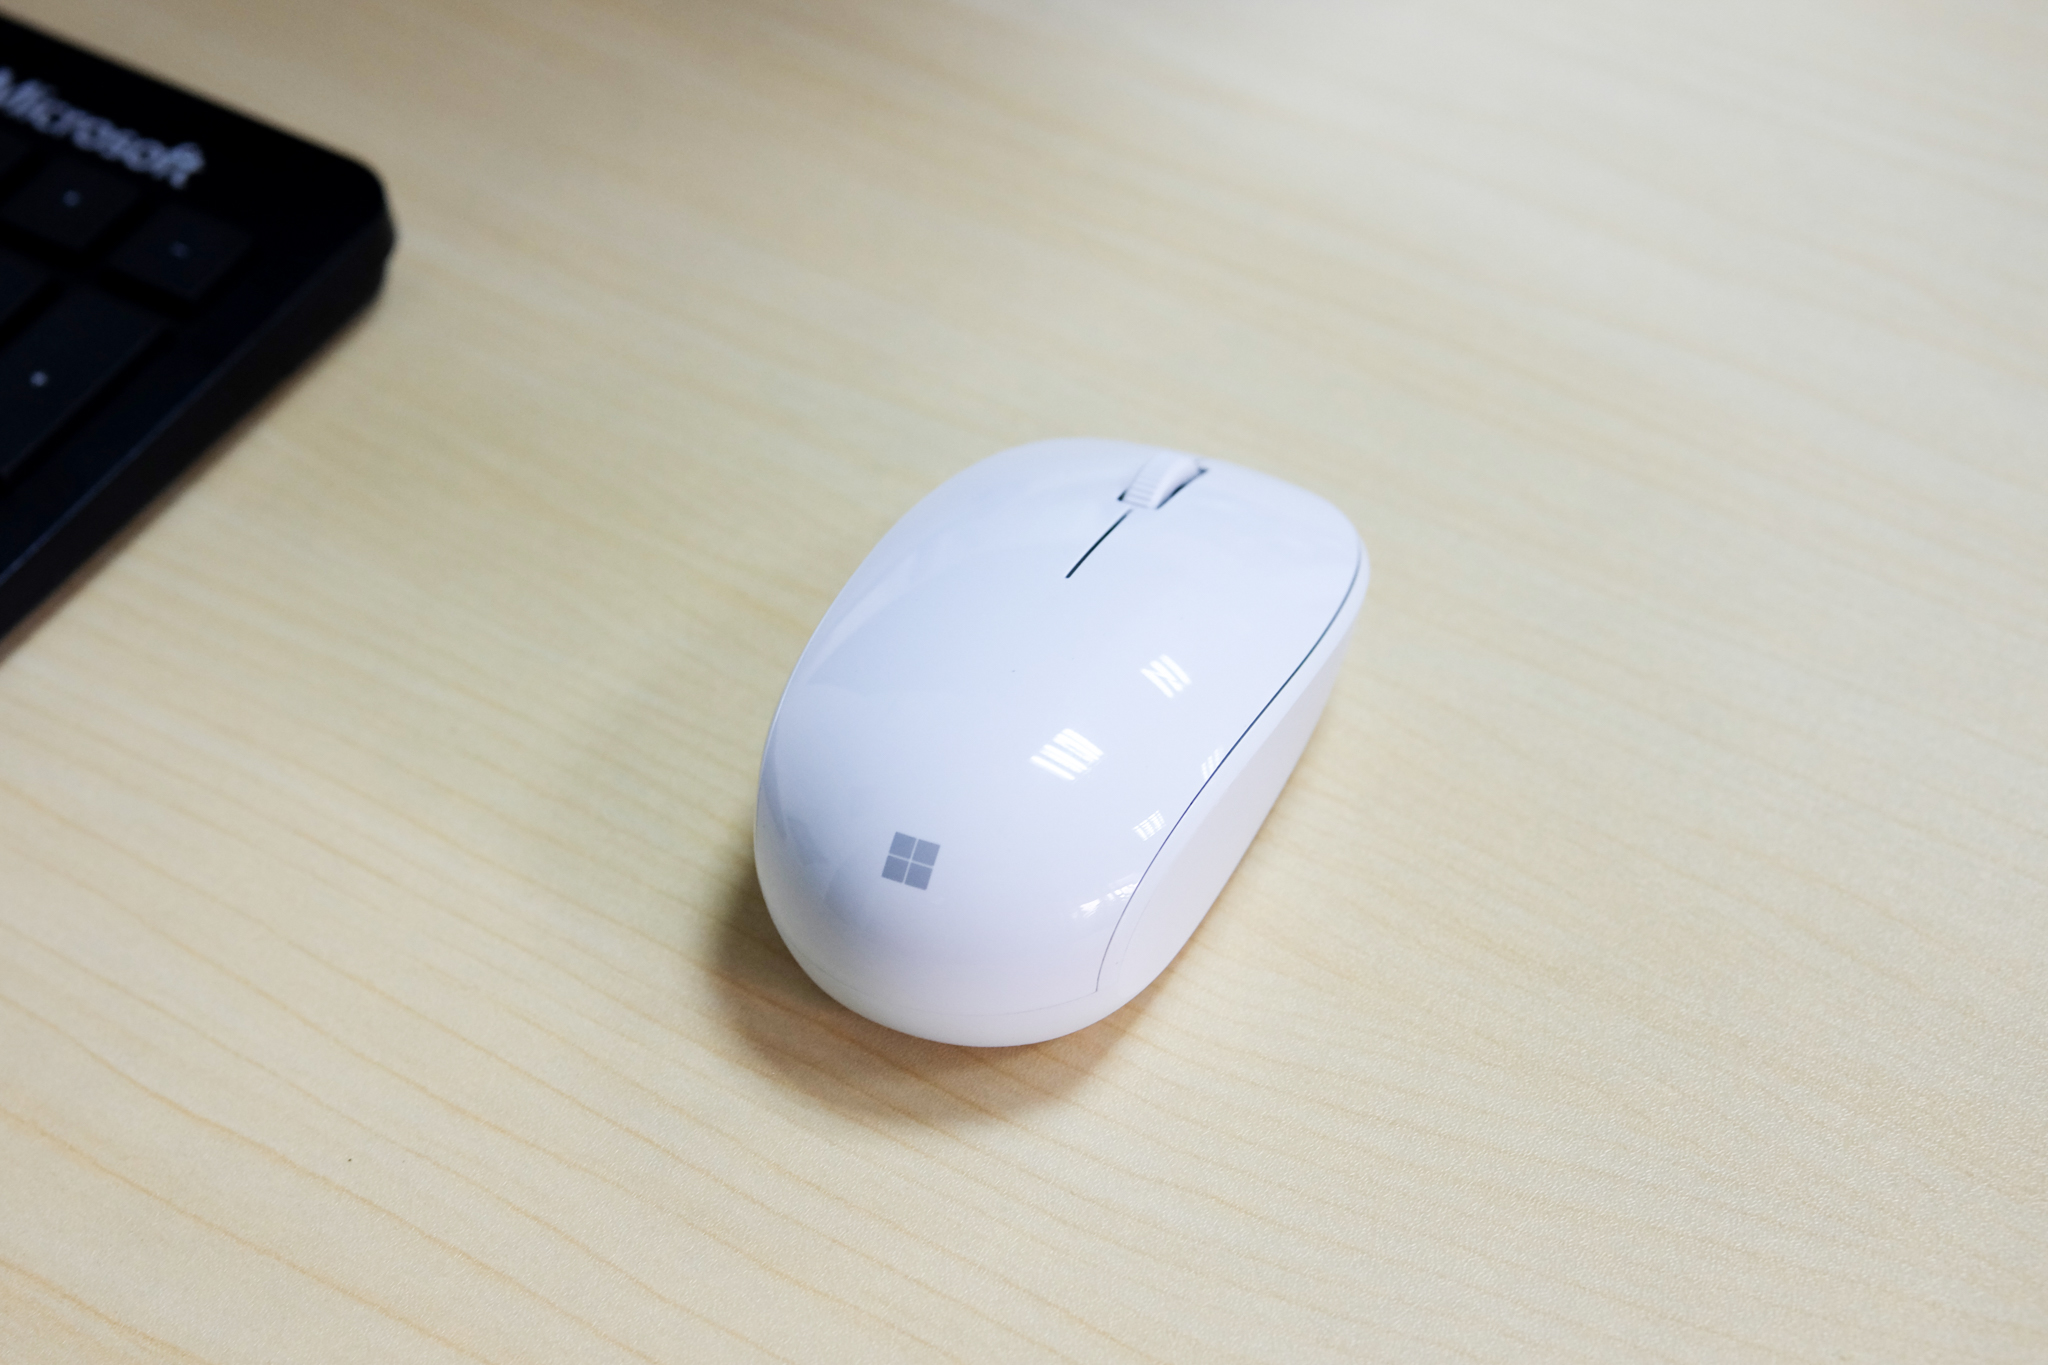 Microsoft Bluetooth mouse 7